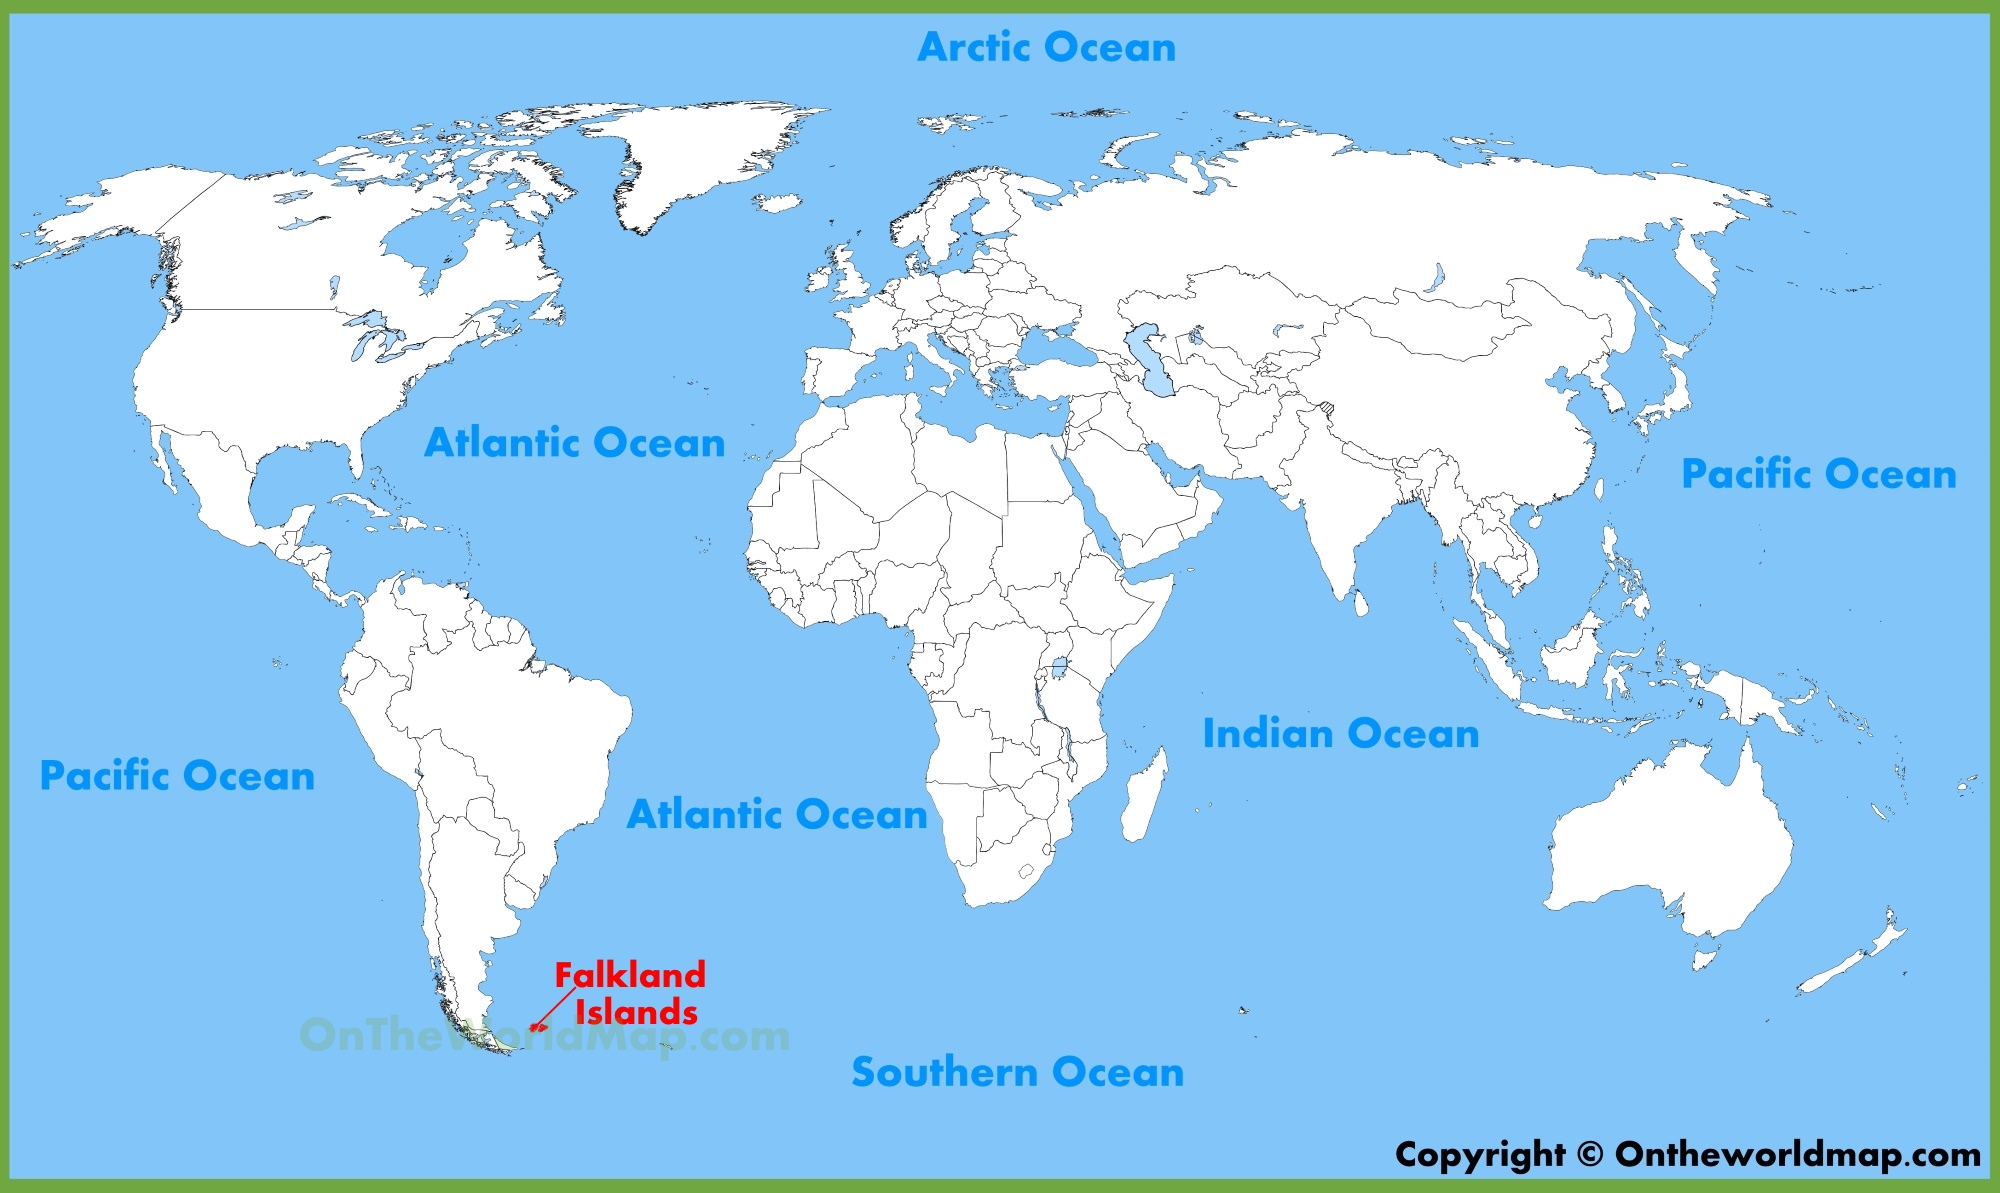 Falkland Islands Location On The World Map